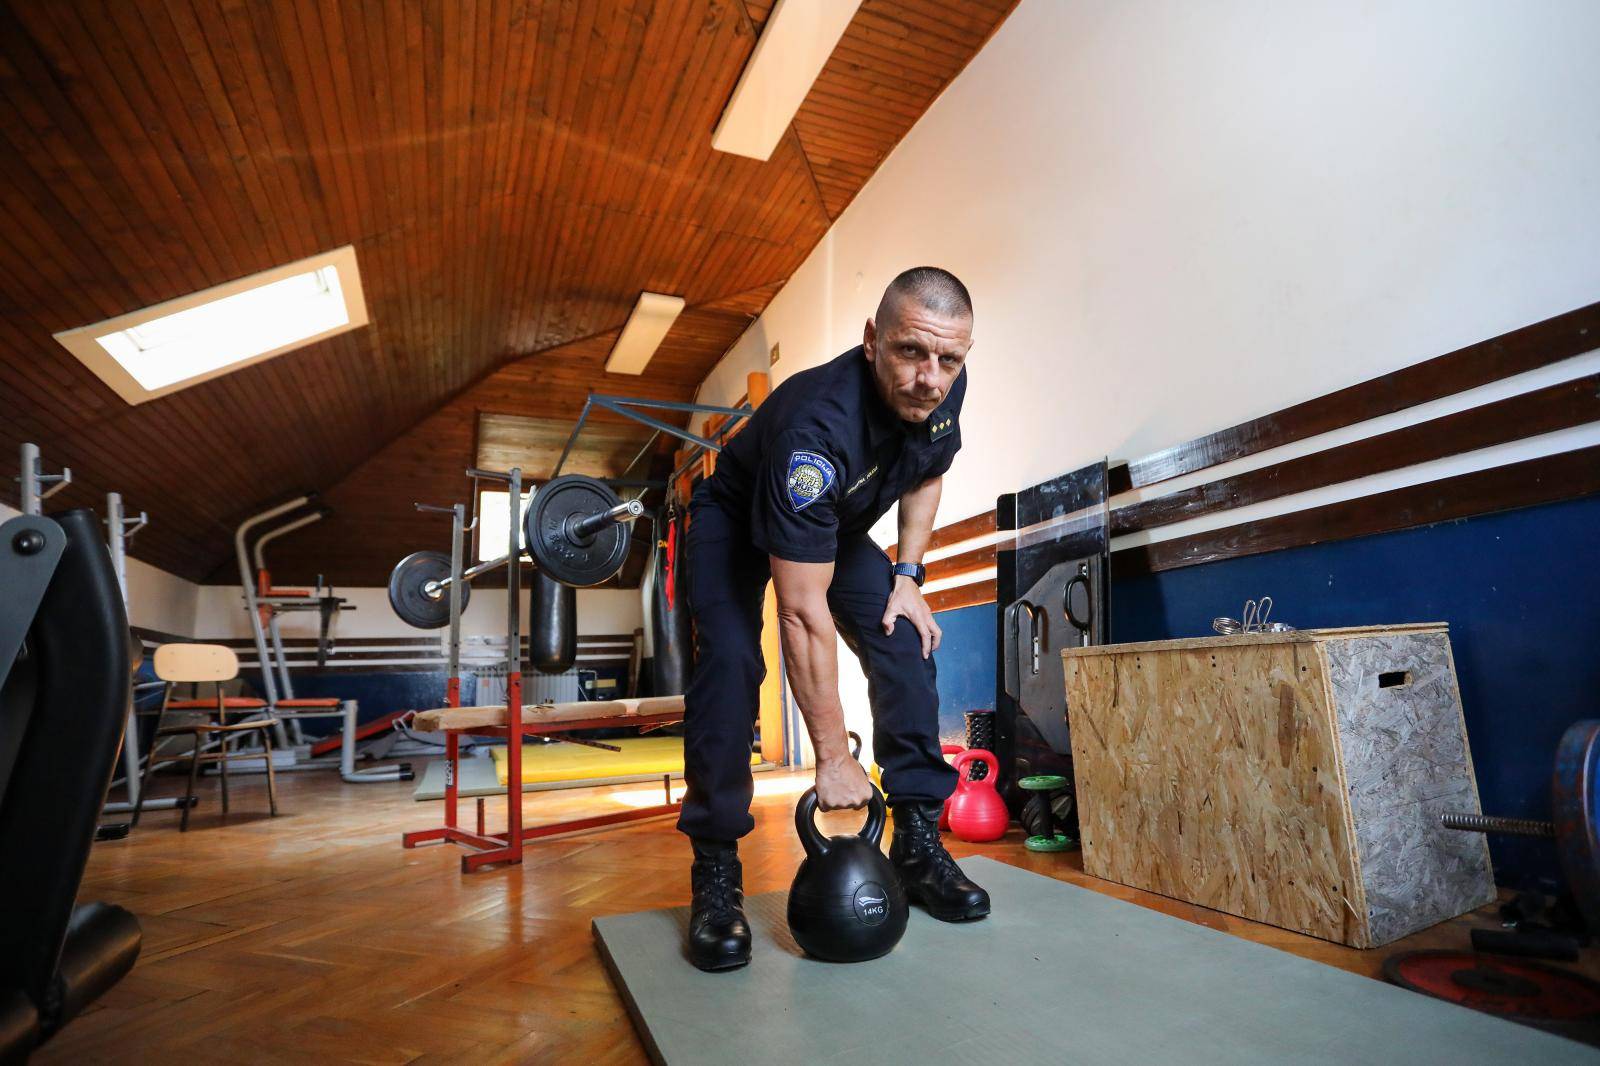 Krunoslav (45) je najspremniji policajac veteran: 'Svaki dan treniram barem  sat vremena'